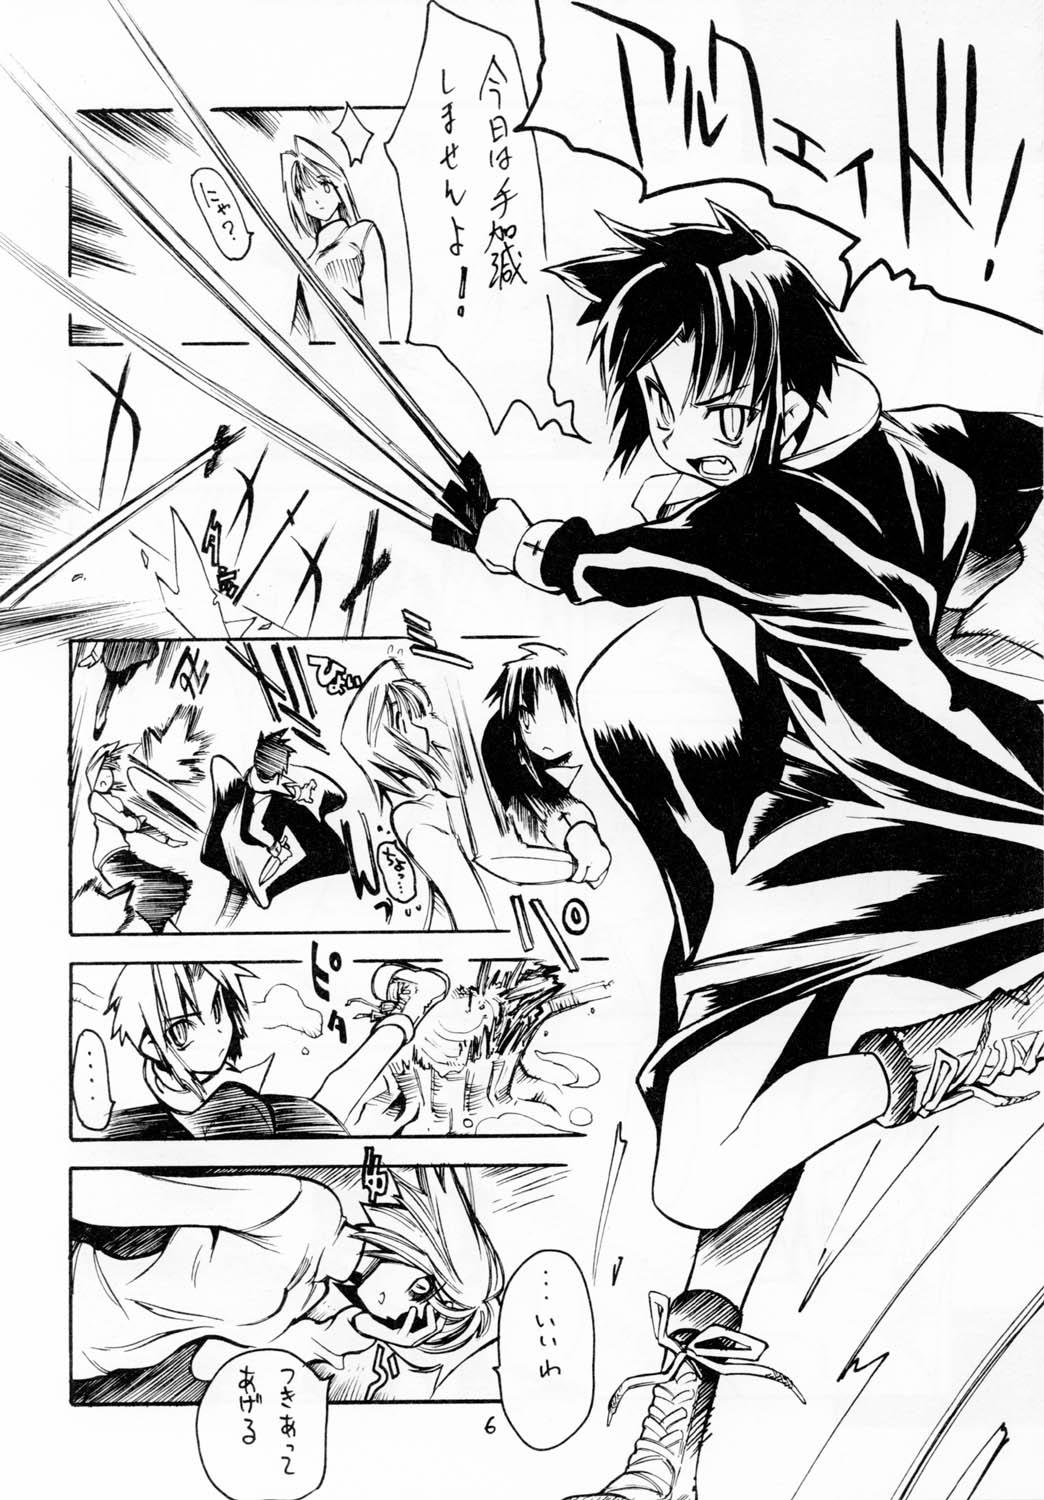 Playing WHITE FANG - Tsukihime Man - Page 5